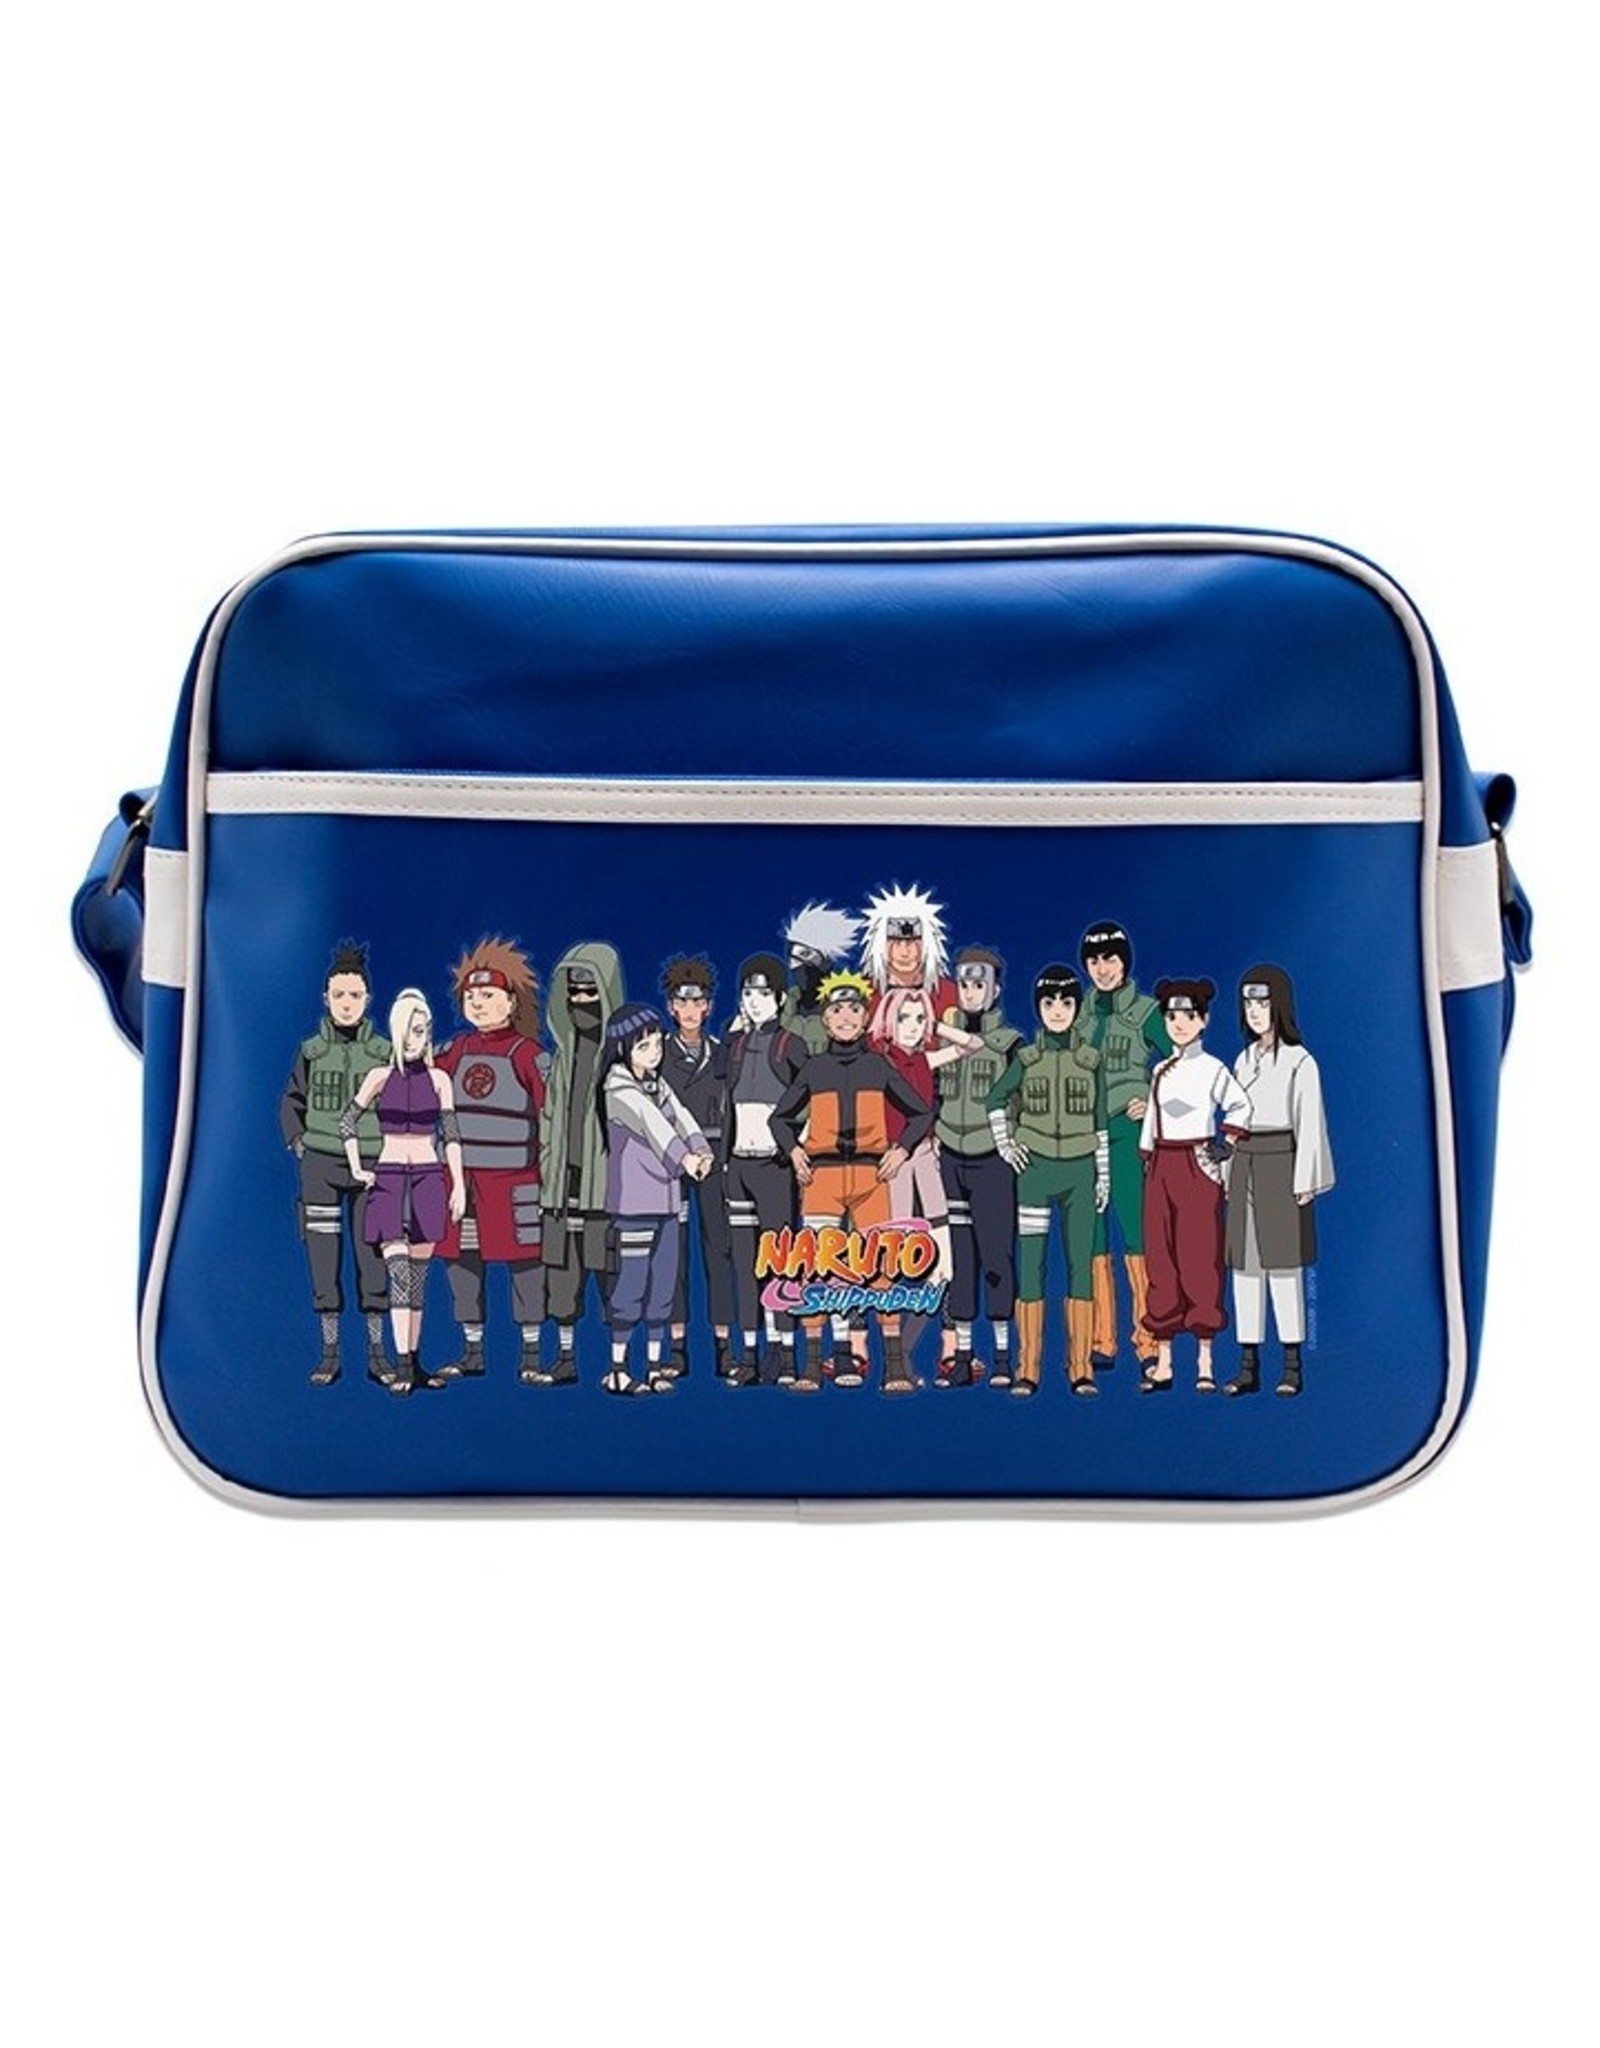 abysse corp Merchandise bags - NARUTO SHIPPUDEN  Messenger Bag Konoha group